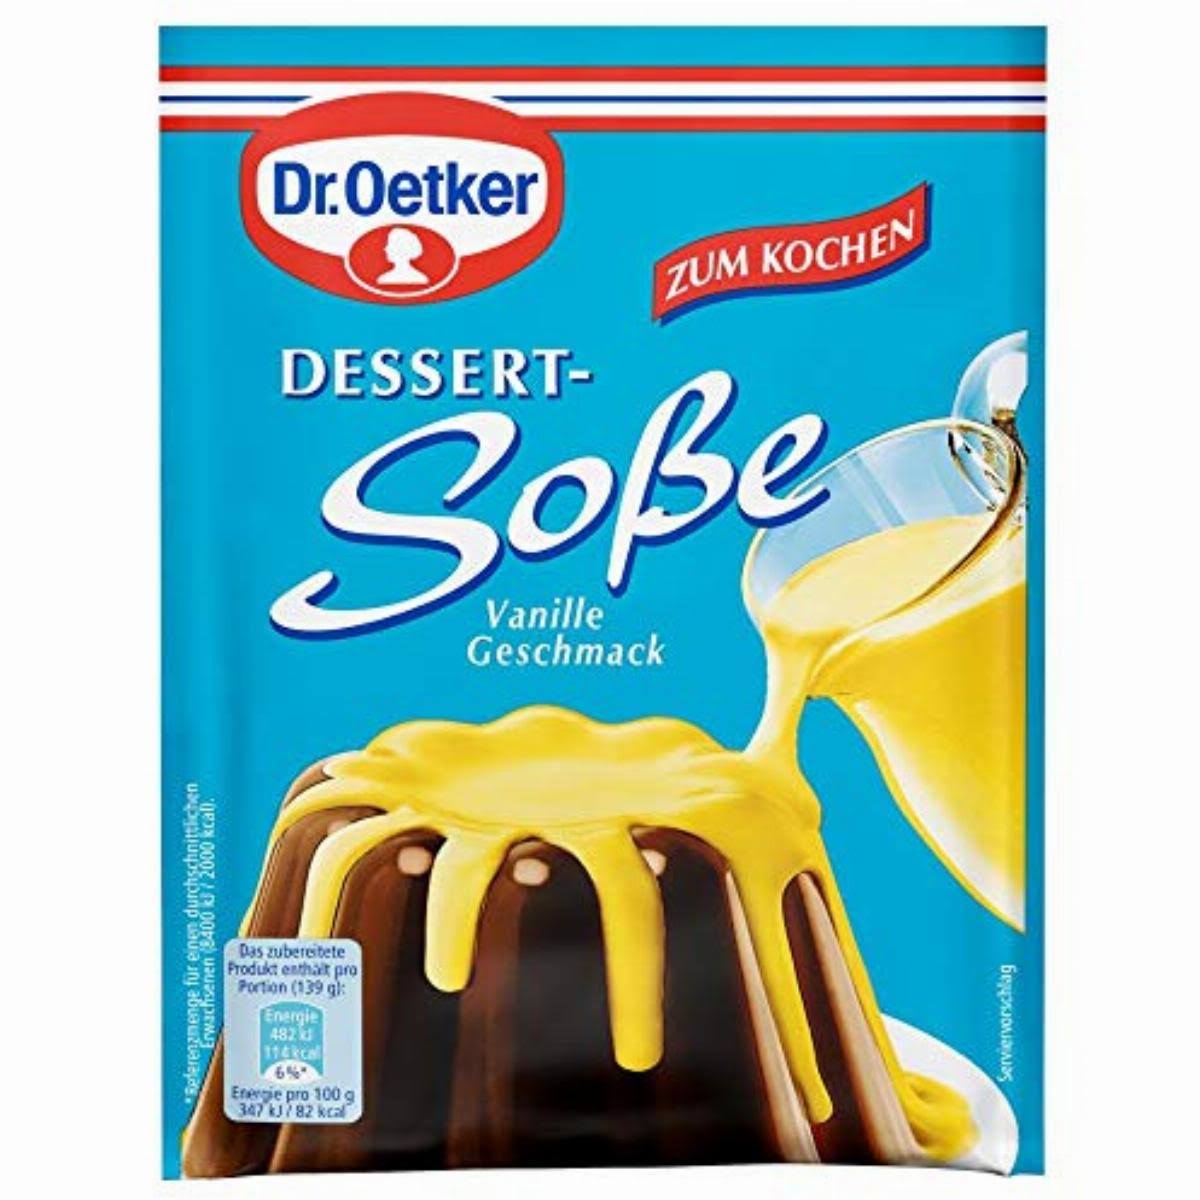 Dr. Oetker Dessert-Soe Vanille Geschmack 3 x 17g